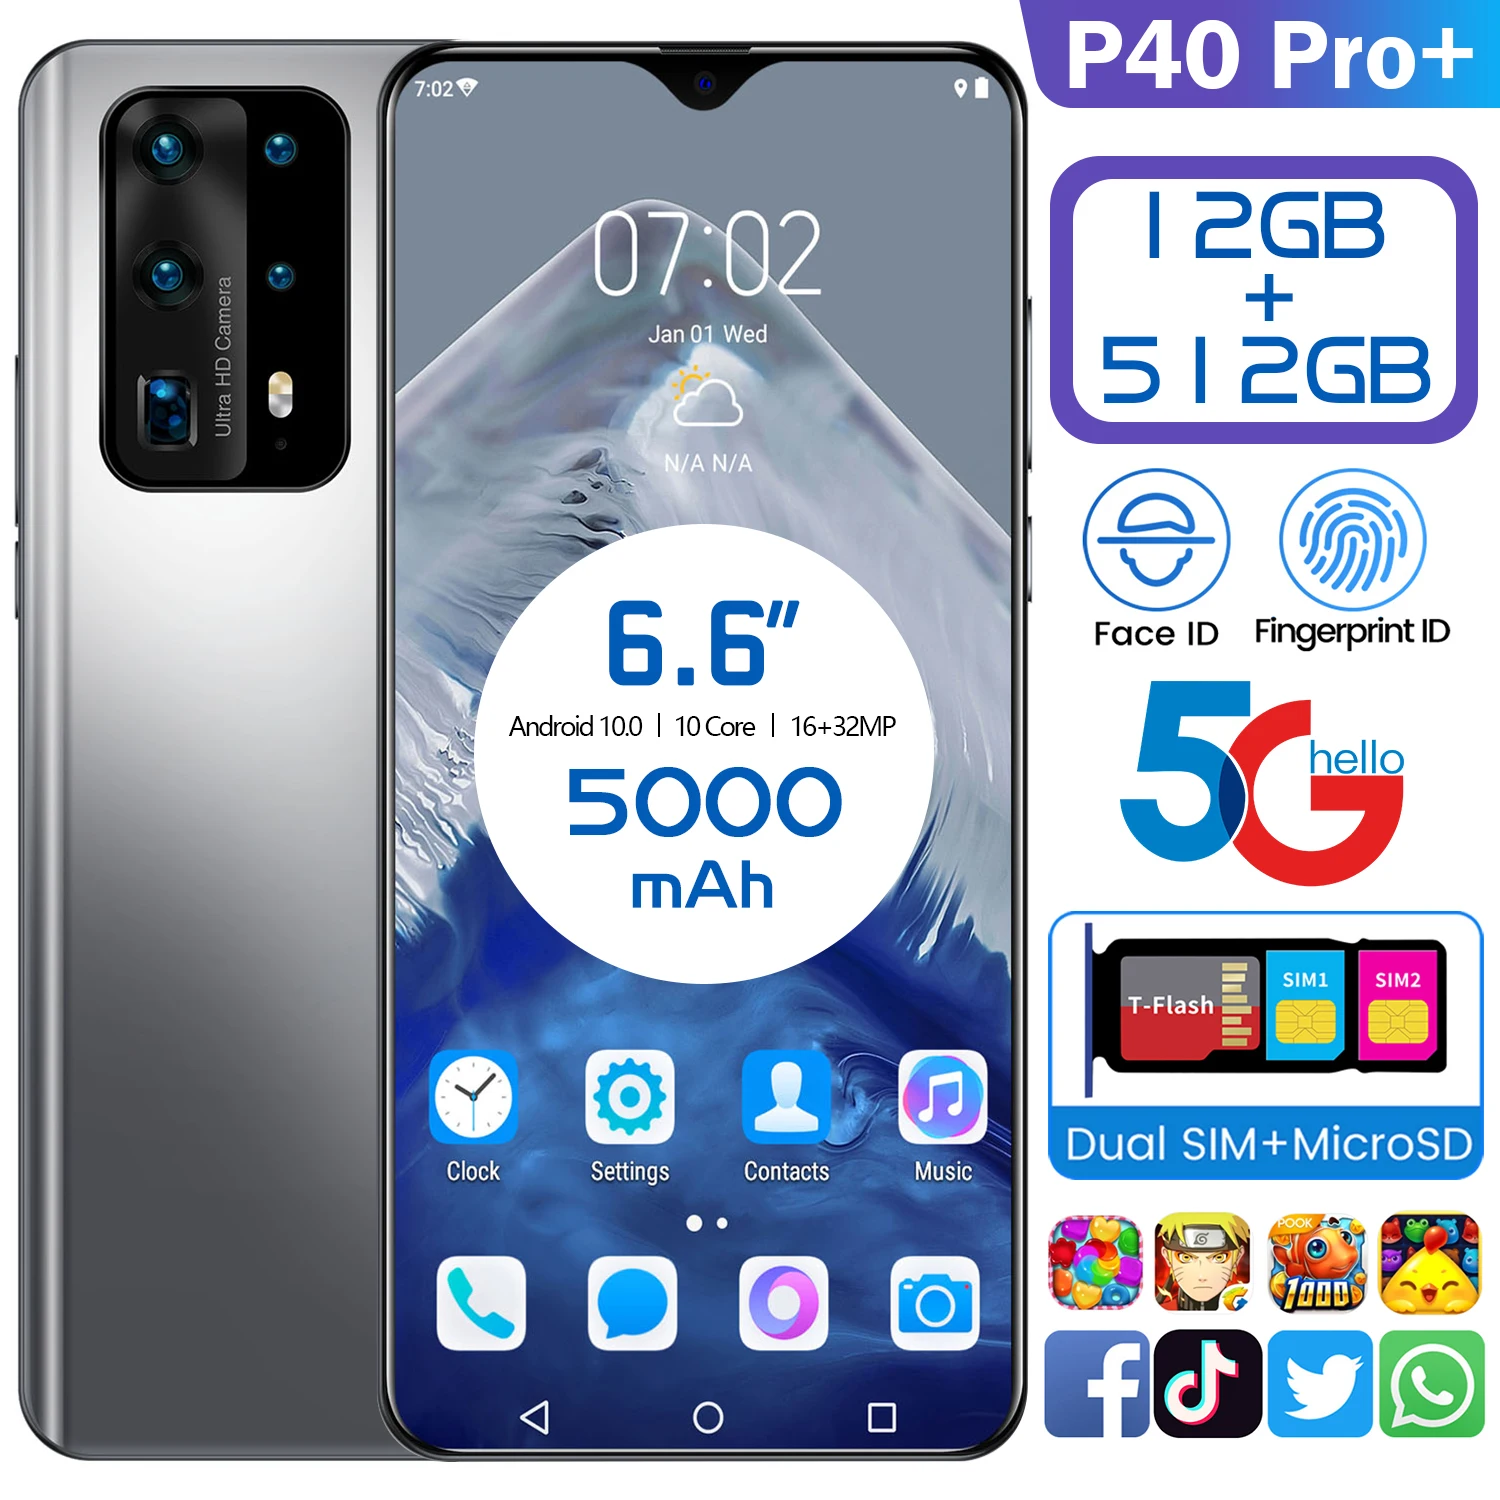 

P40 Pro+ 5G 8G 256GB unlocked Smartphone Cell Phone 6.6 OLED Display Deca Core 5000mAh Fingerprint Dual SIM Mobile Phone, Black,silver,blue